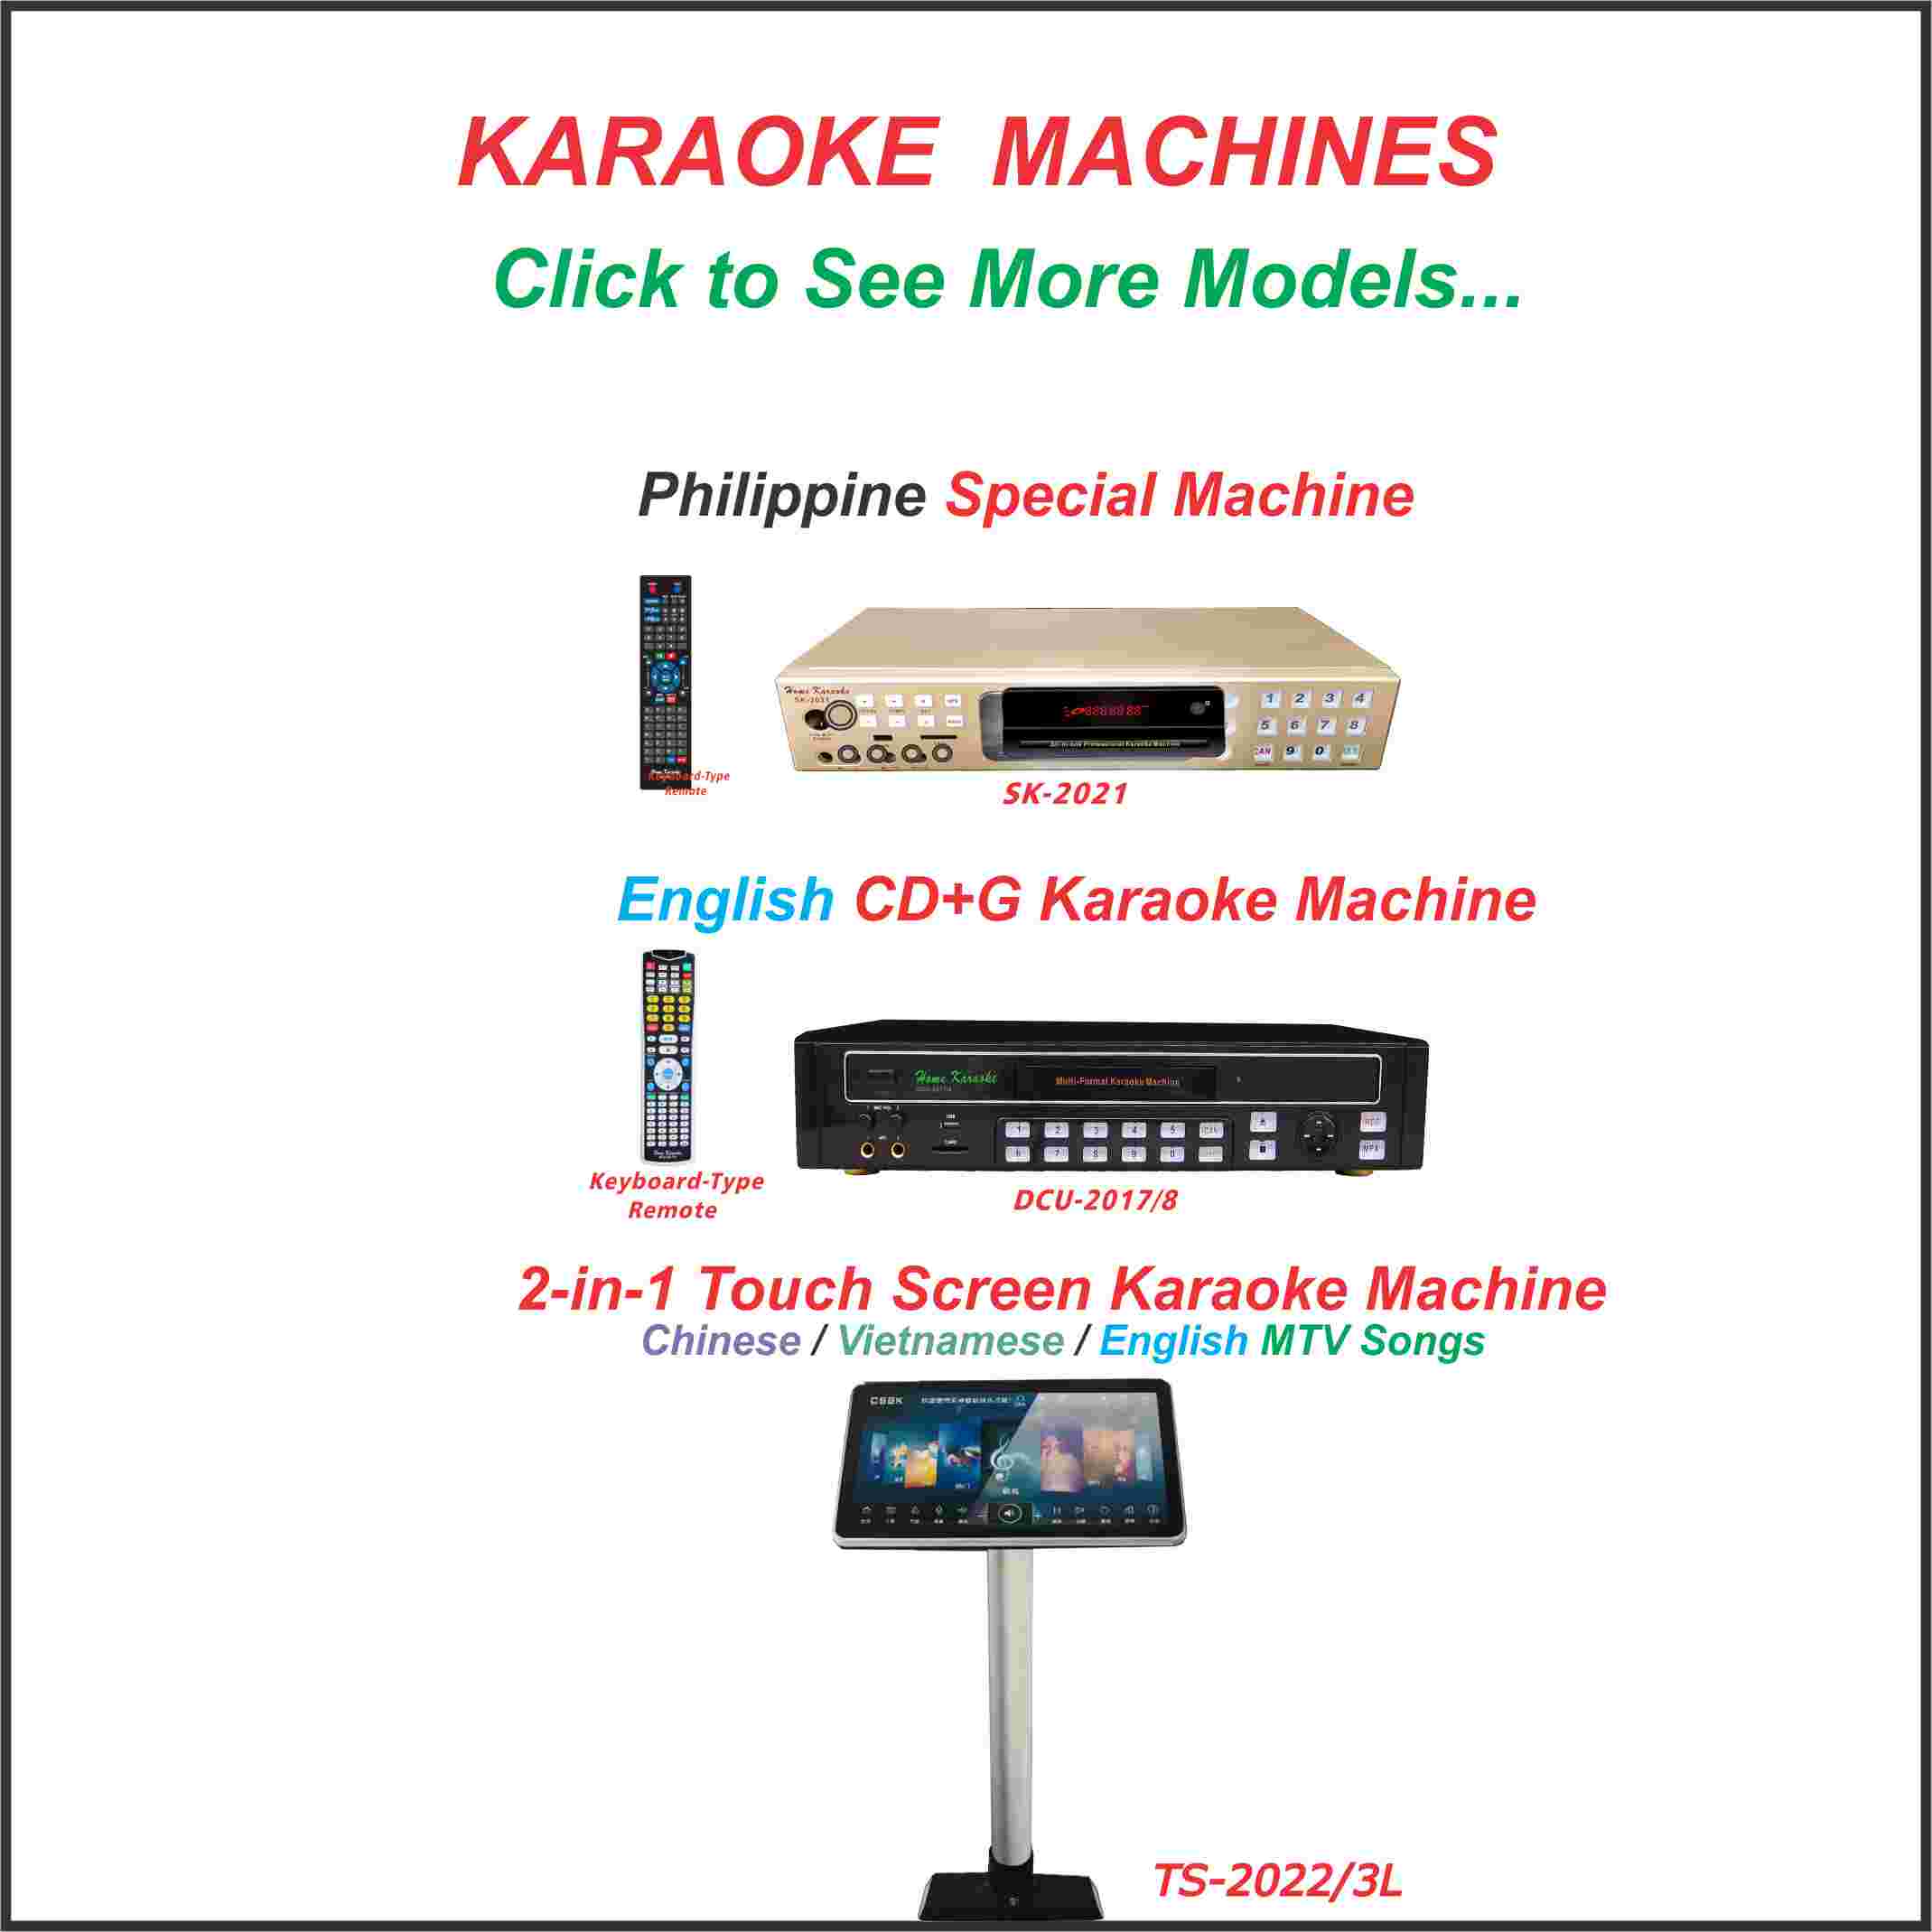 1. Karaoke Machine